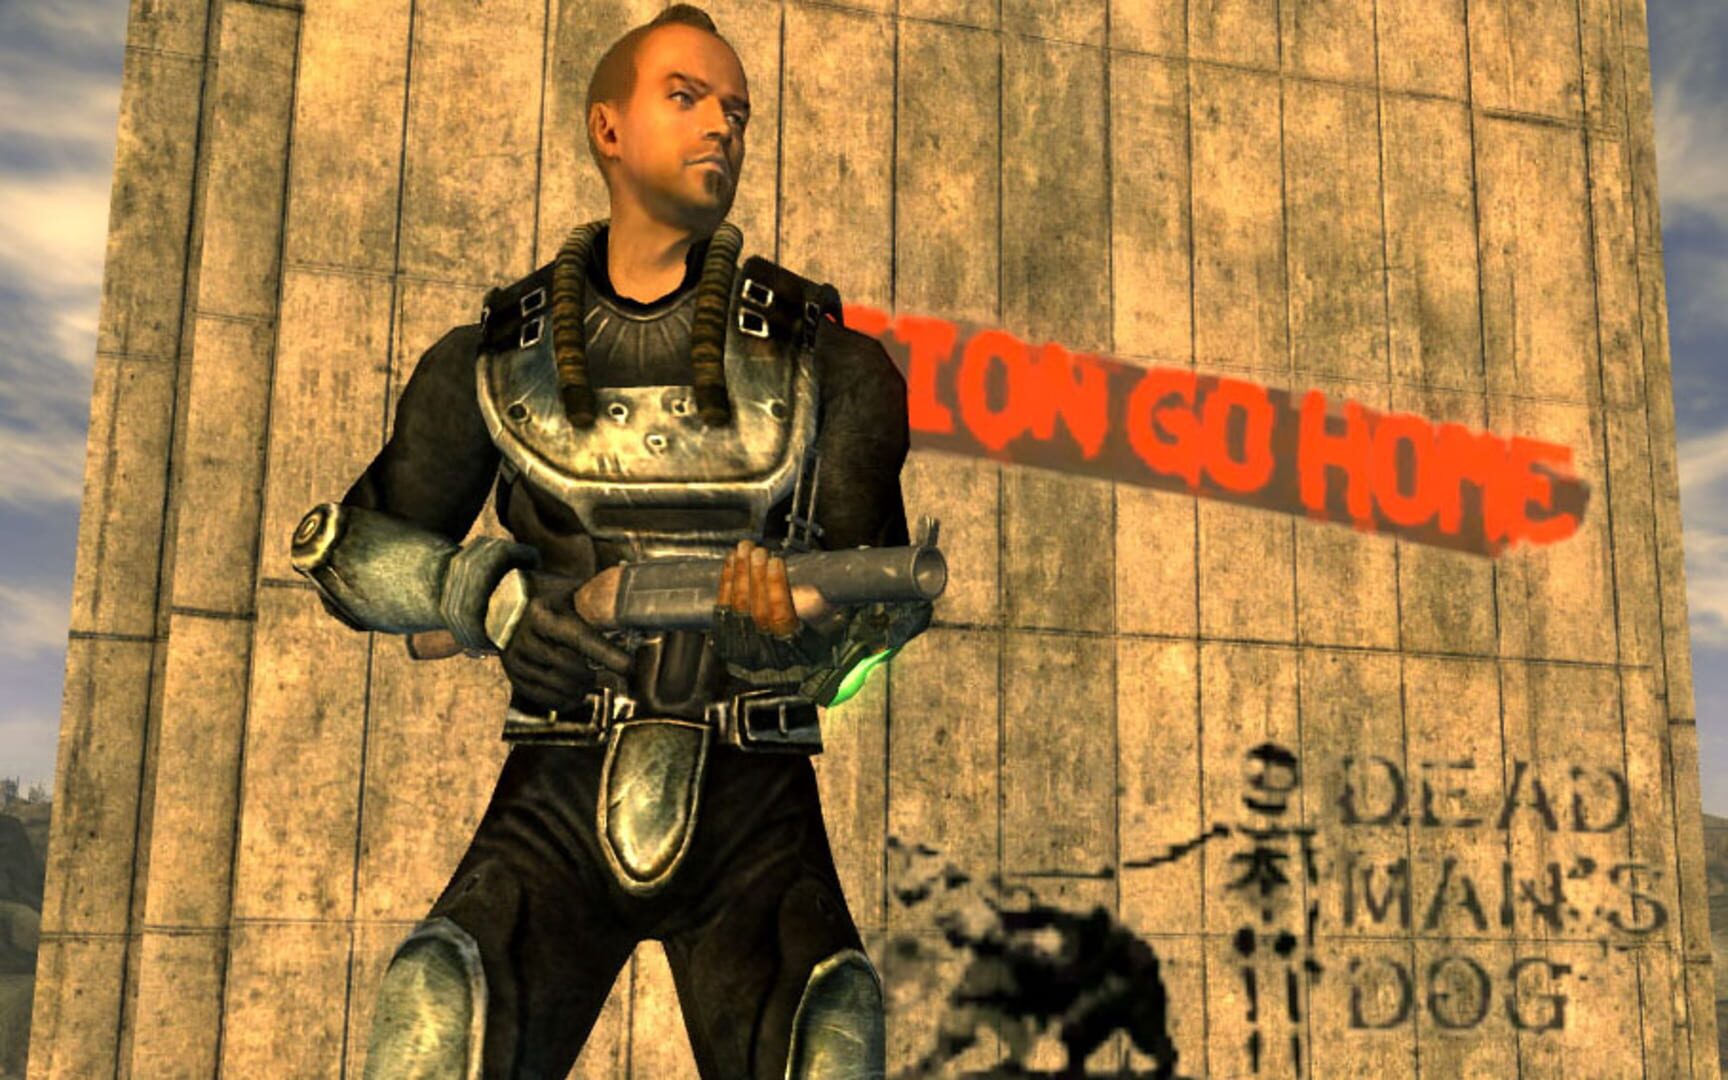 Fallout: New Vegas screenshots